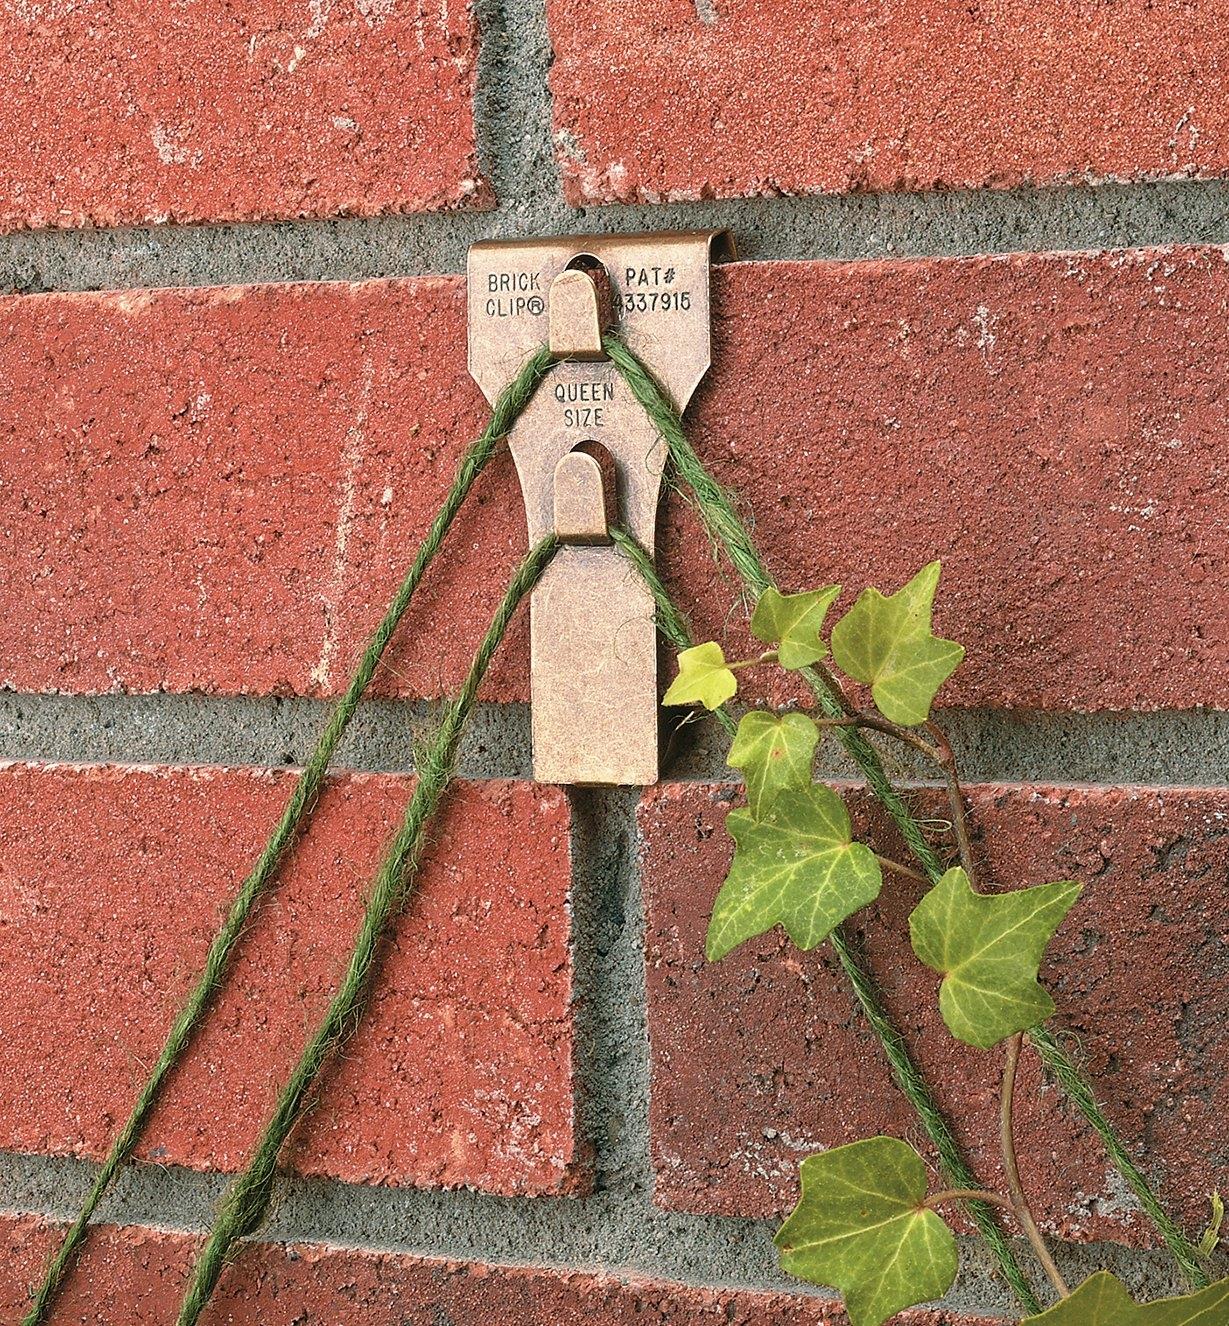 Brick Clip holding a trellis on a brick wall